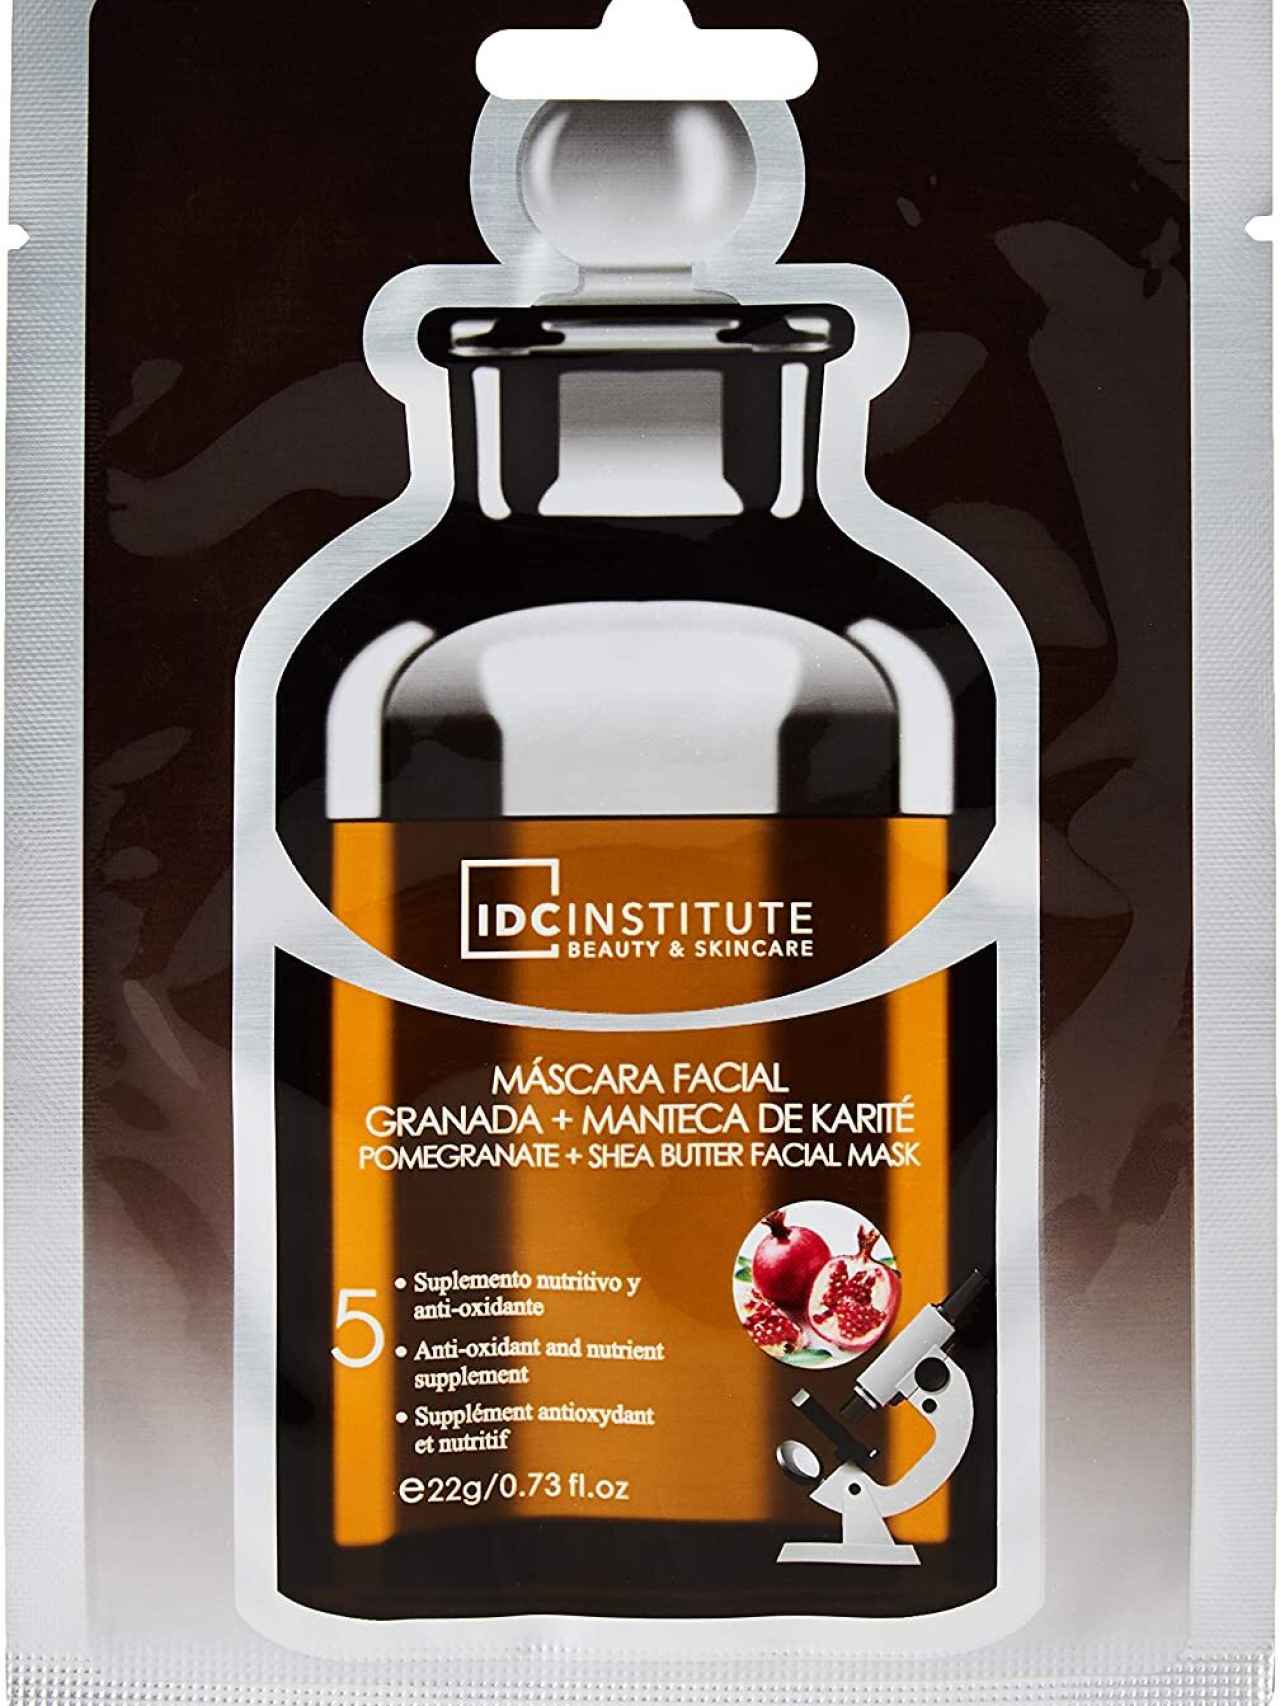 Mascarilla hidratante de IDC Institute.